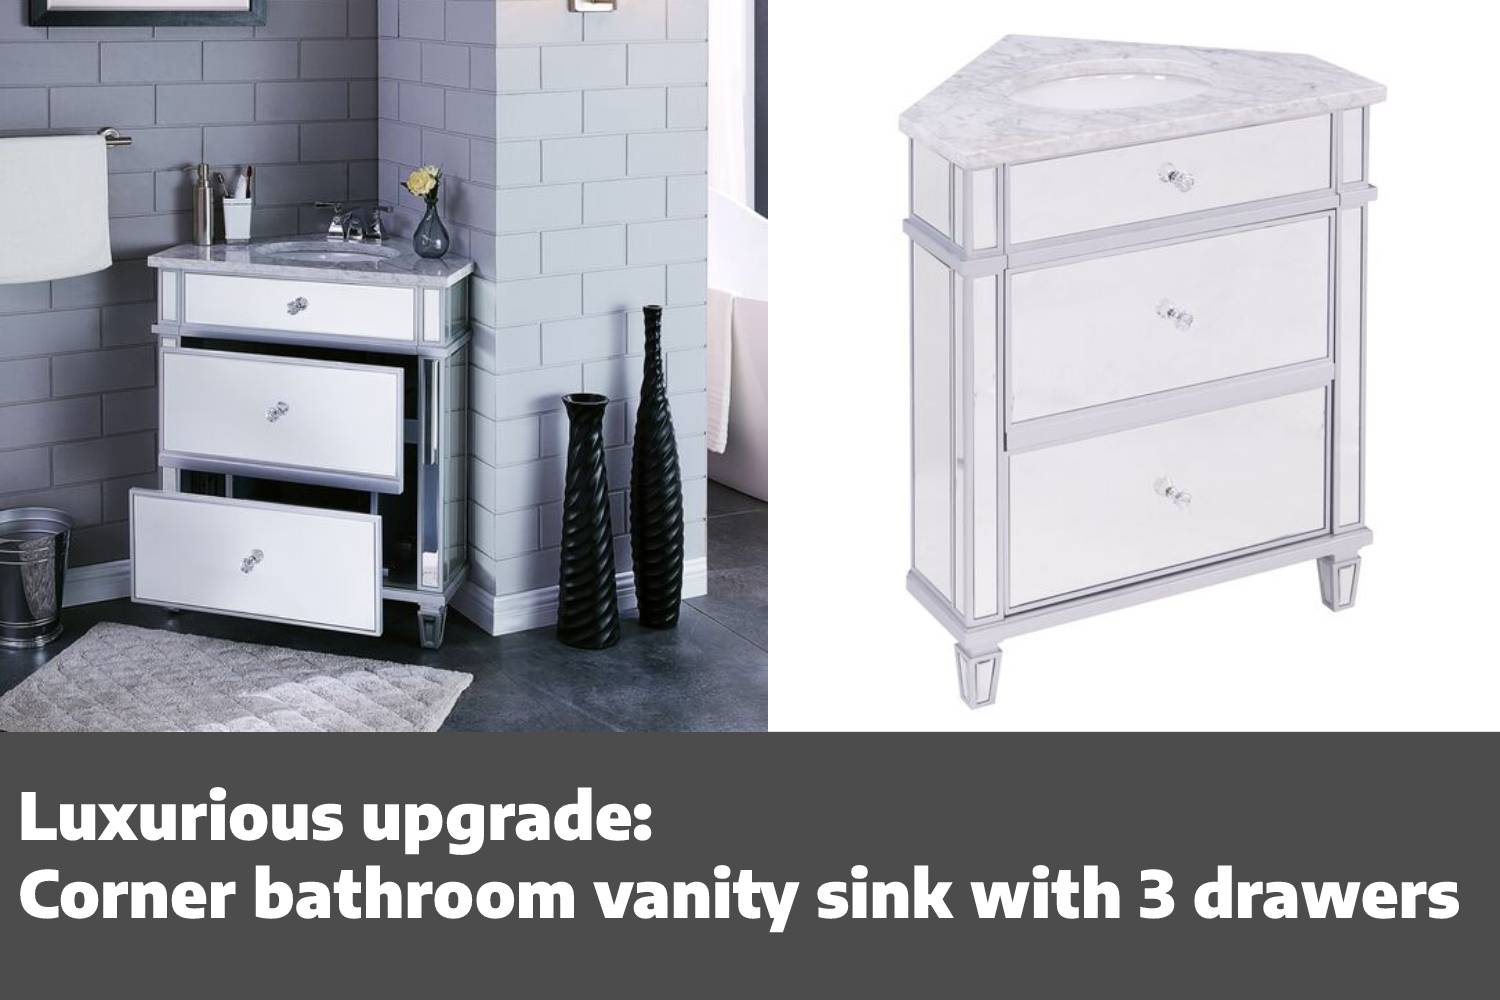 Luxurious upgrade corner bathroom vanity sink with drawers